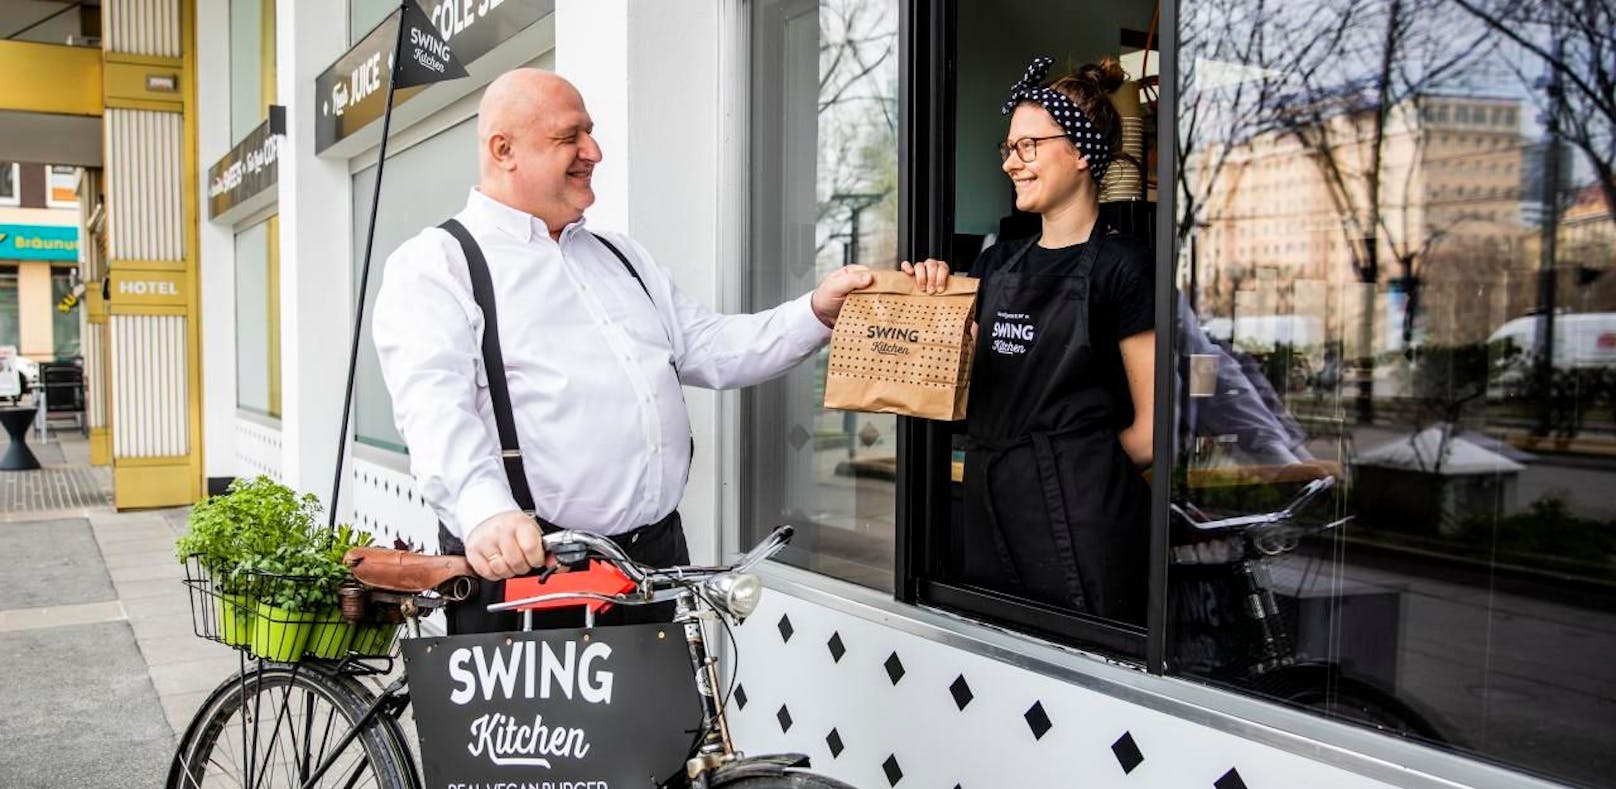 Swing Kitchen eröffnet erstes "Bike-in" Wiens